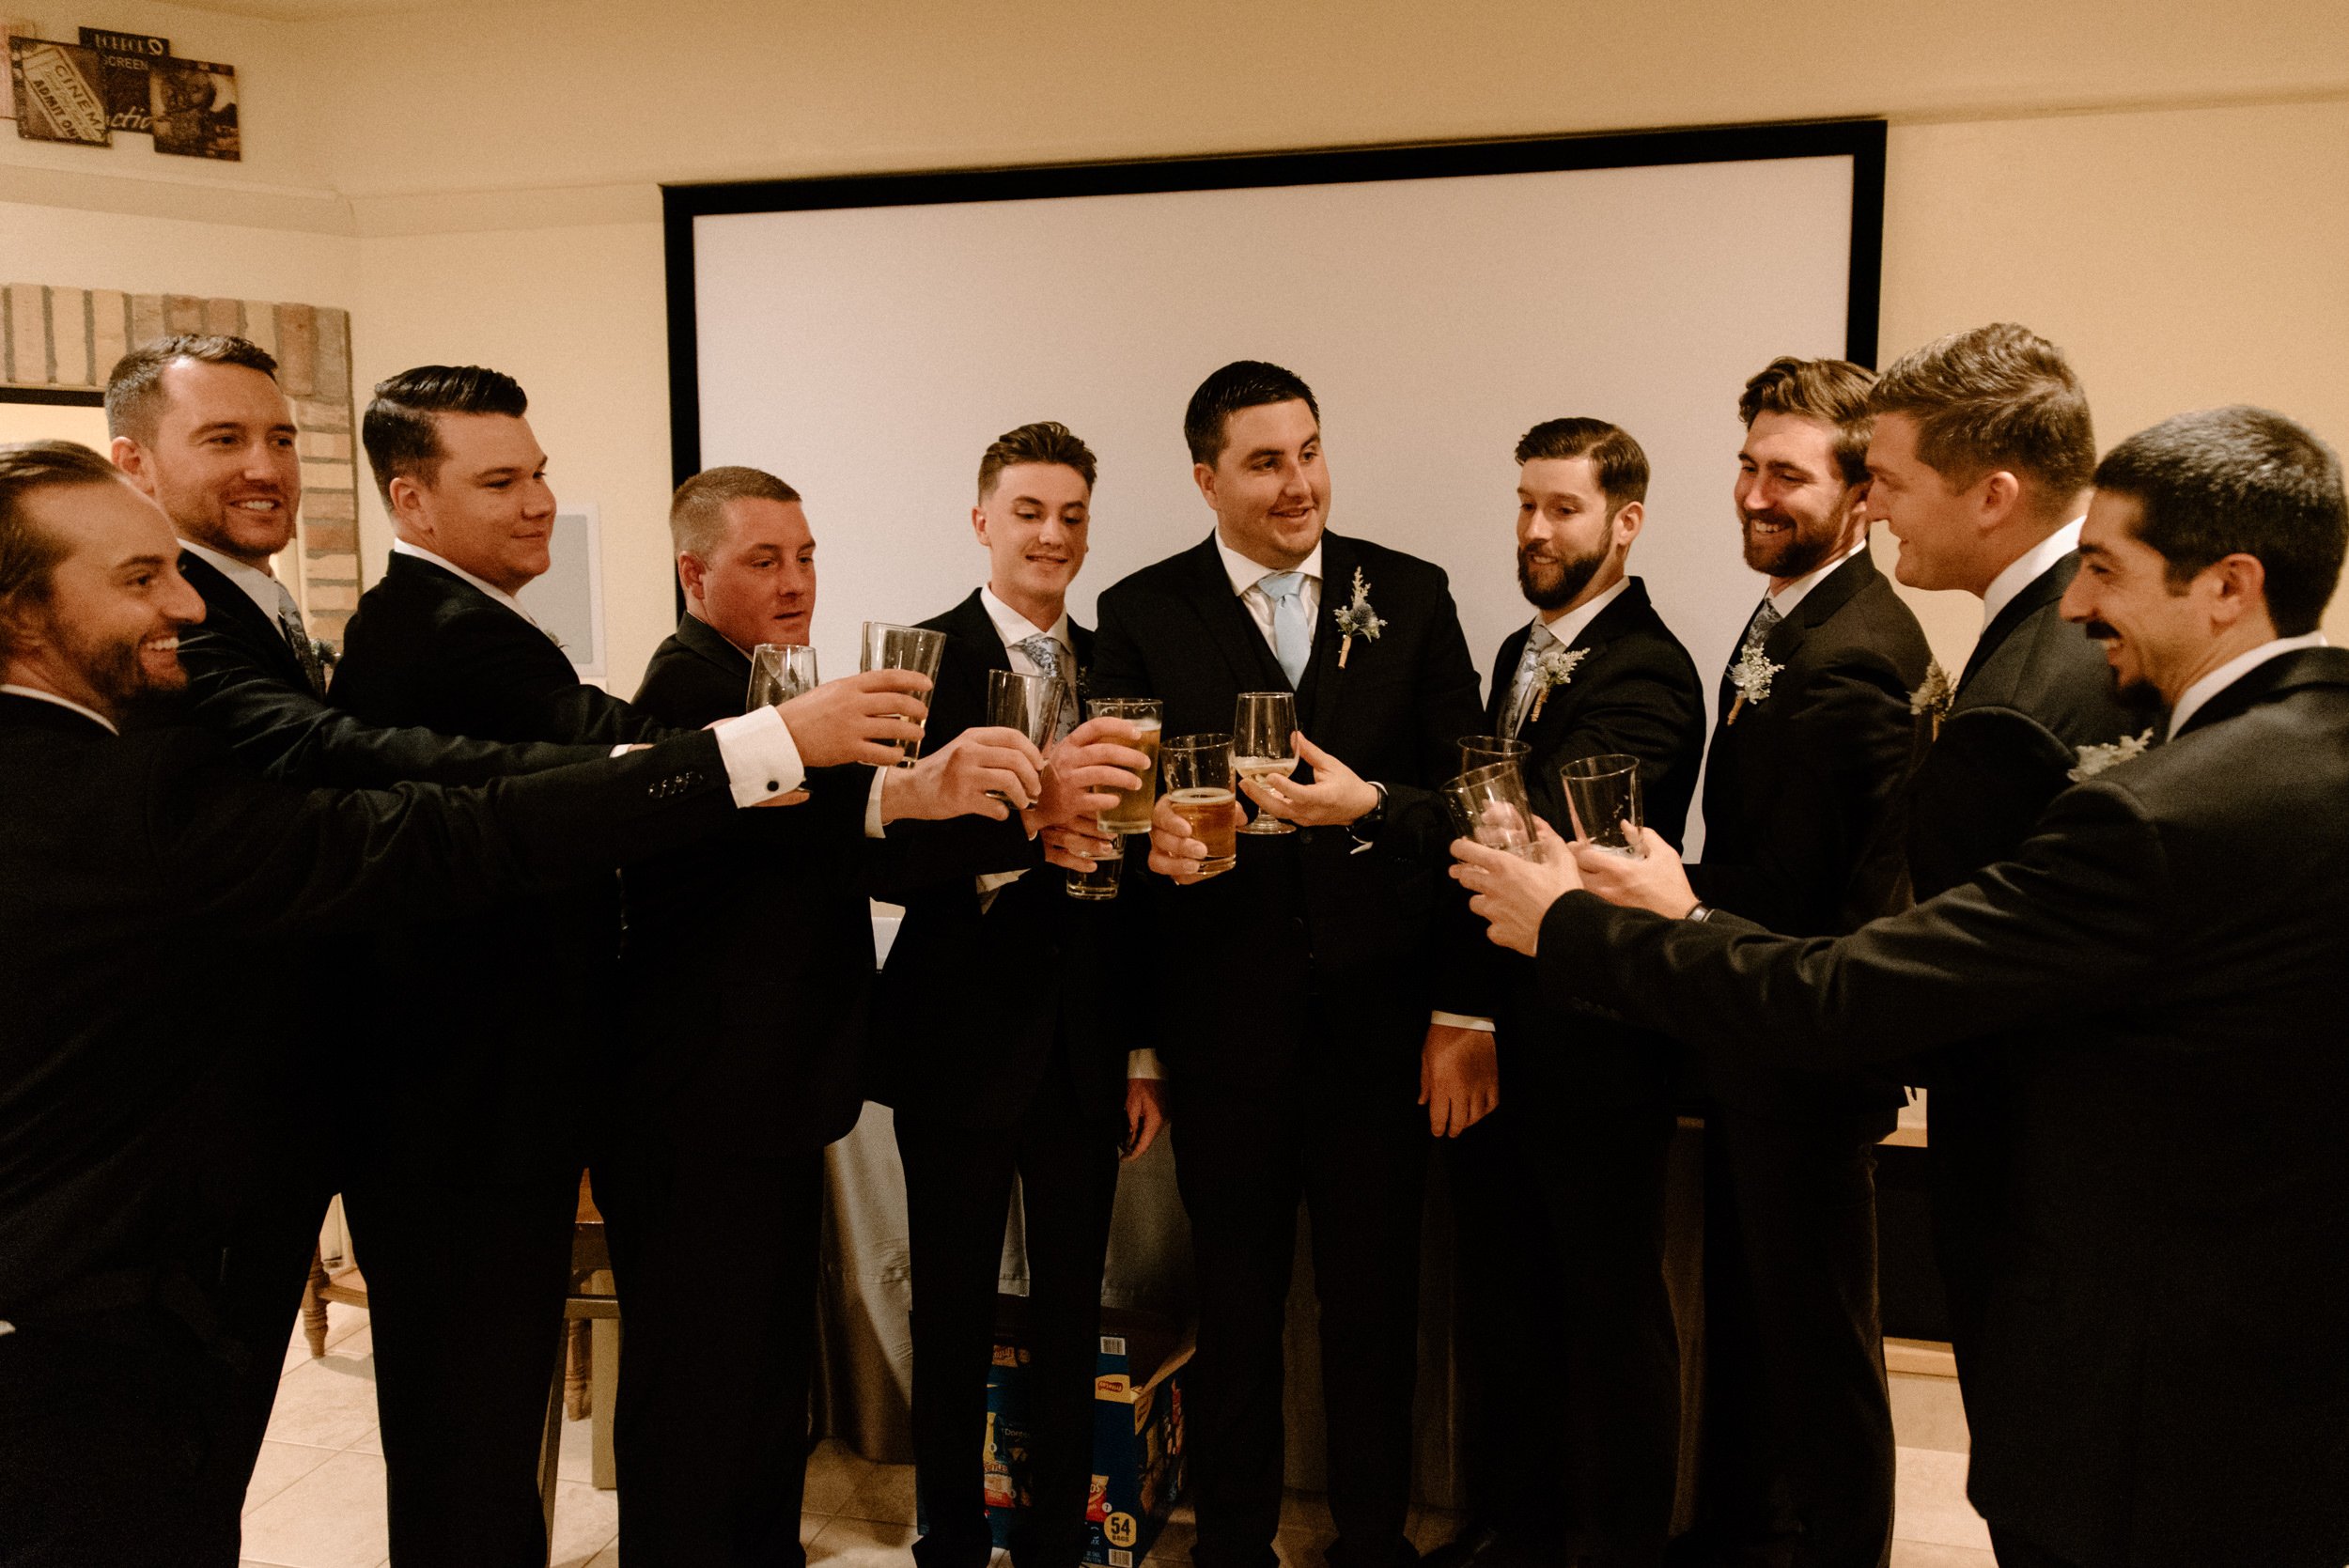 The groomsmen lift their beer glasses in toast